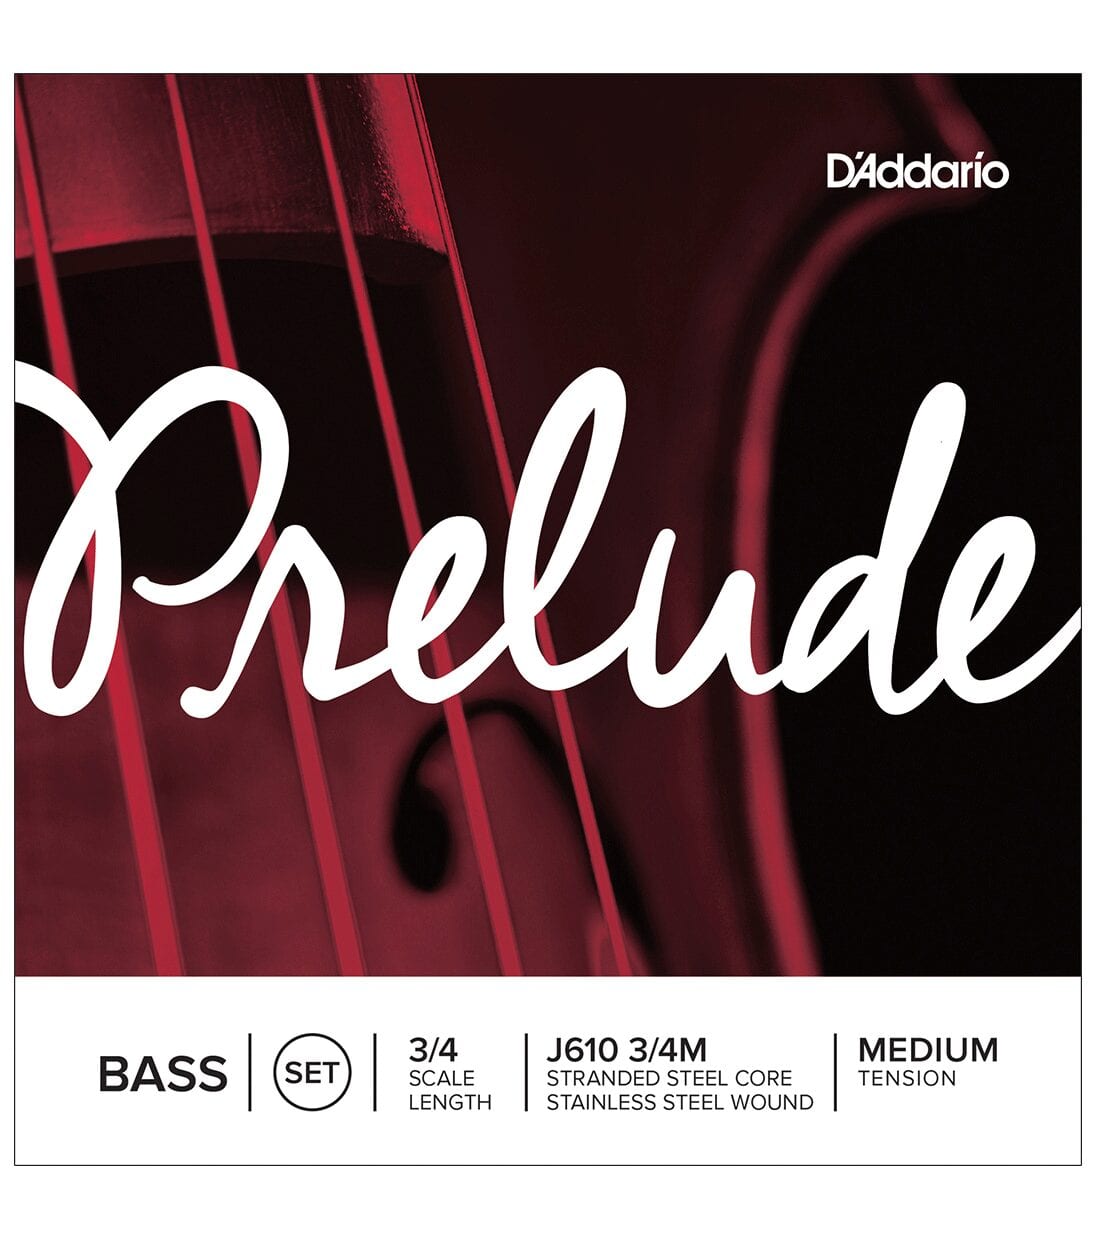 D’Addario Prelude Bass J610 3/4M, Medium Tension Prelude Bass String Set